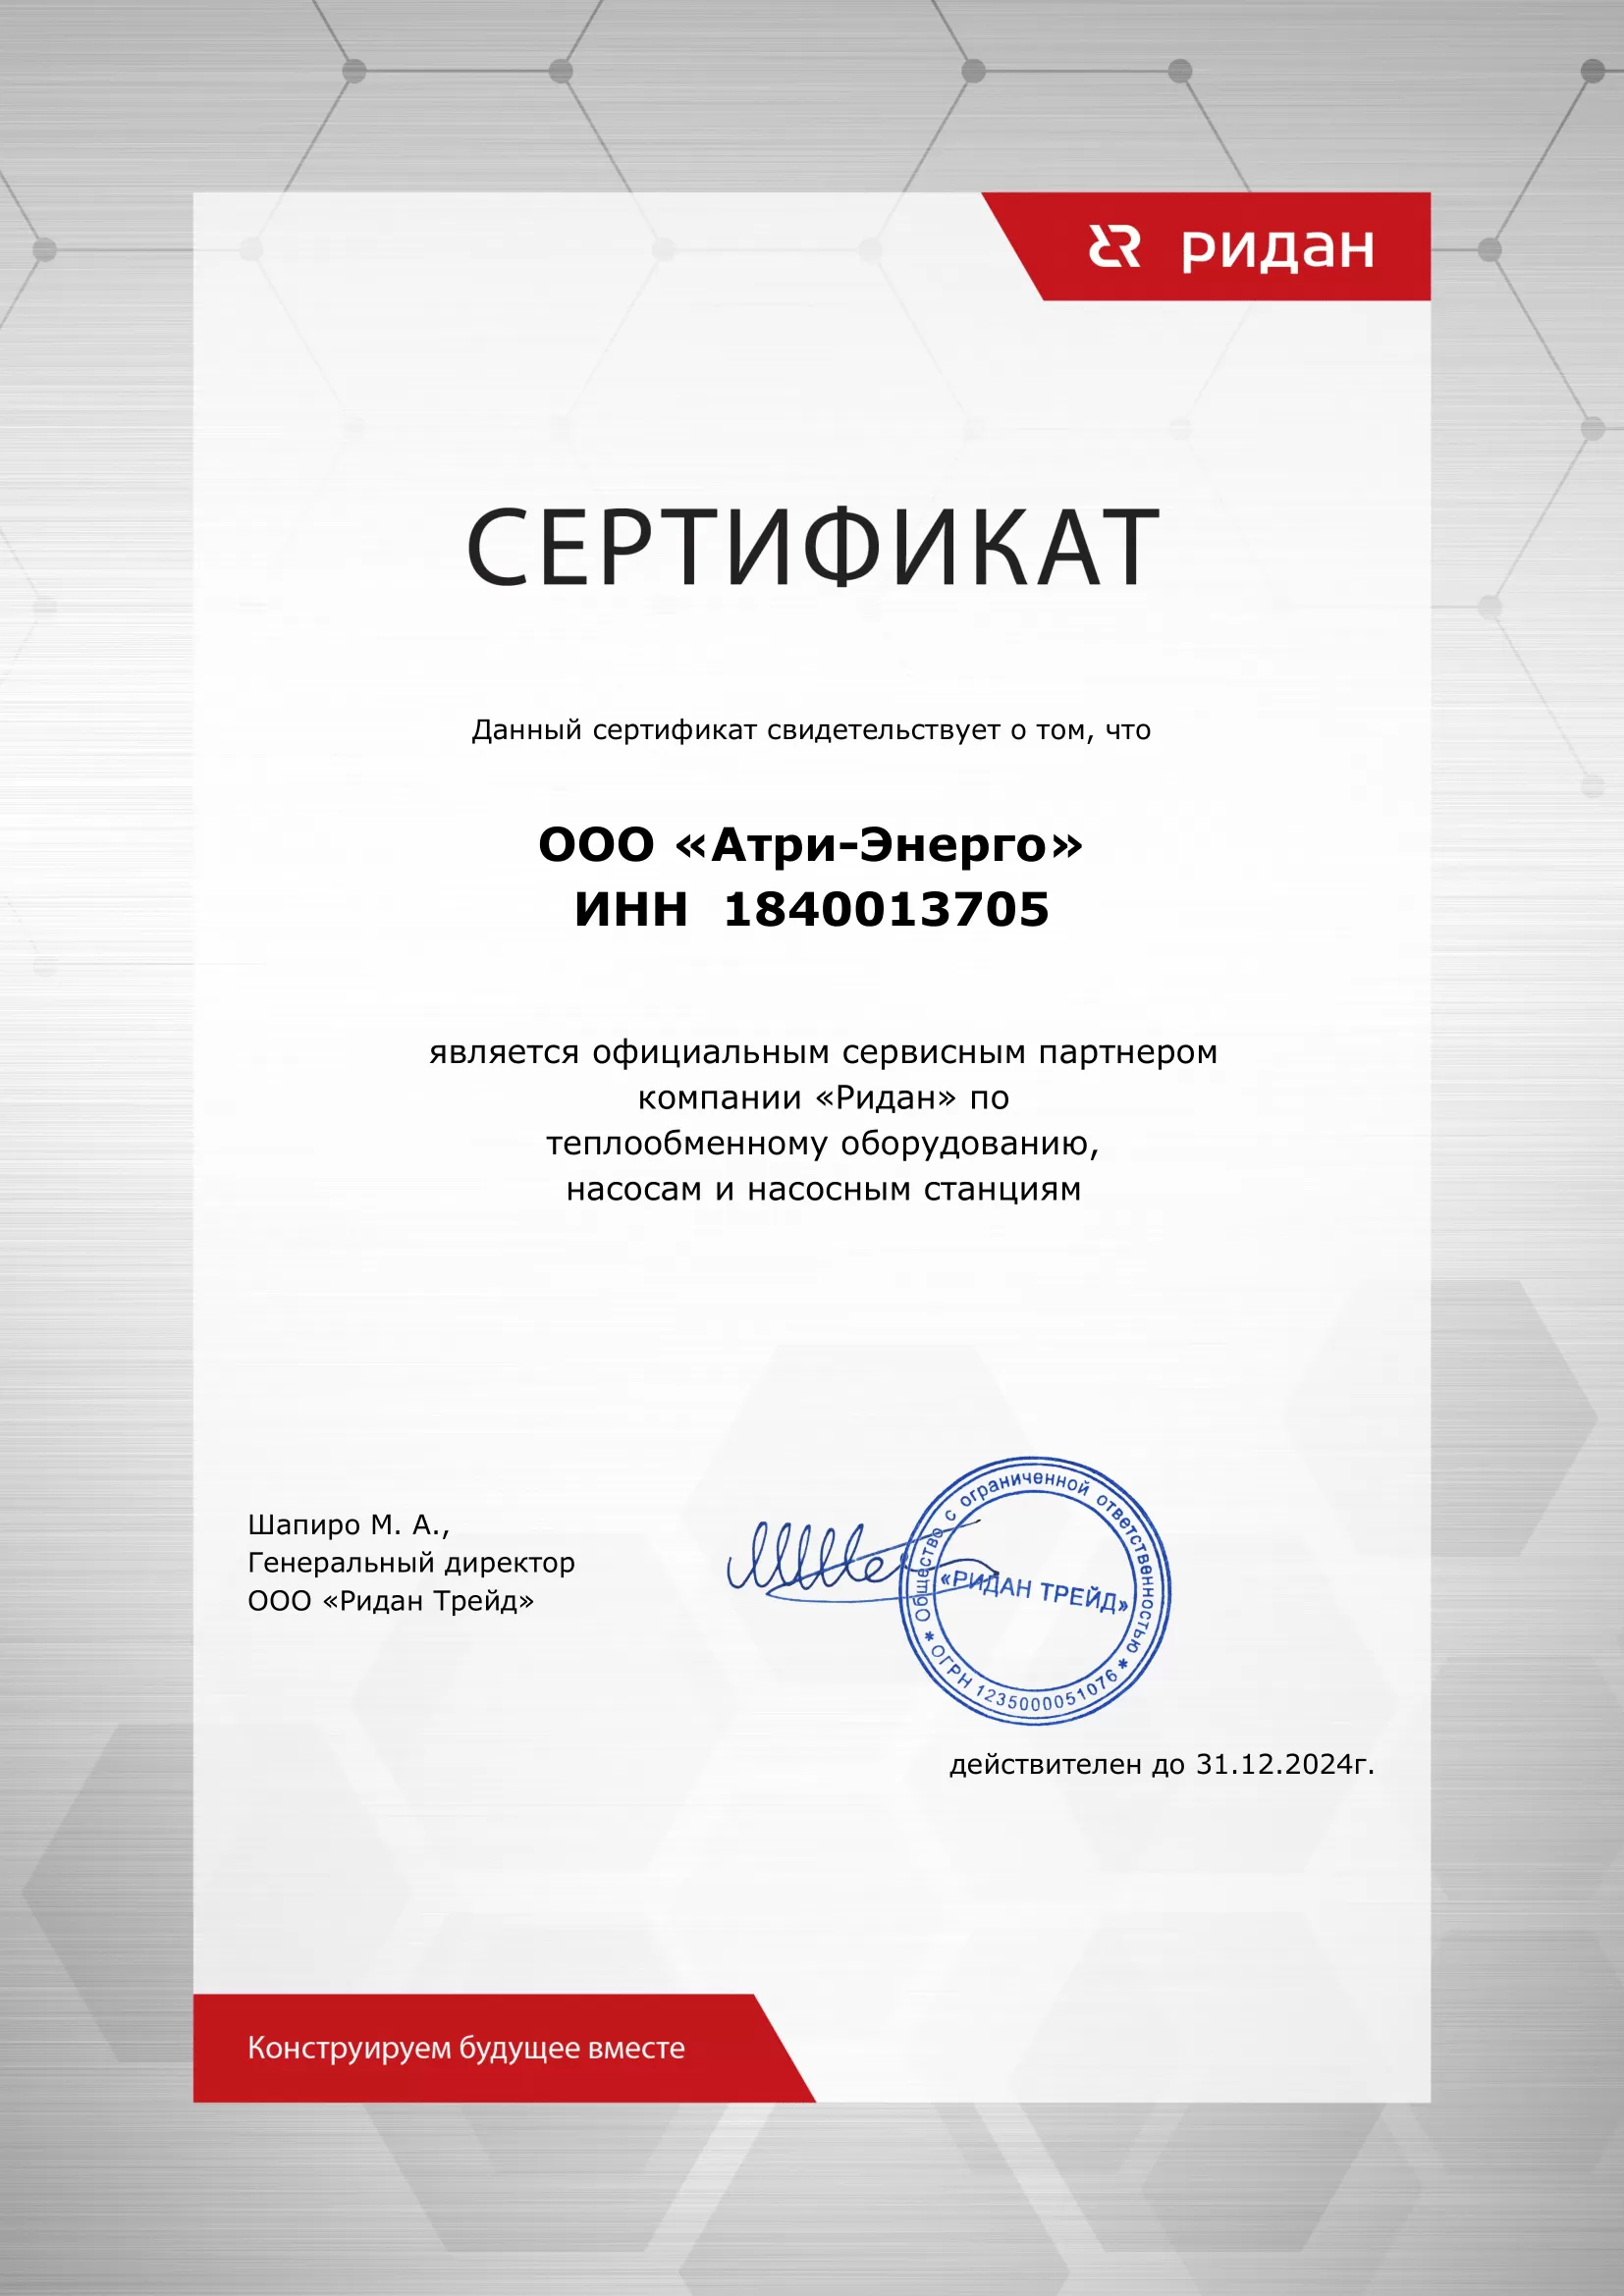 "Ридан" Сертификат сервисного партнёра